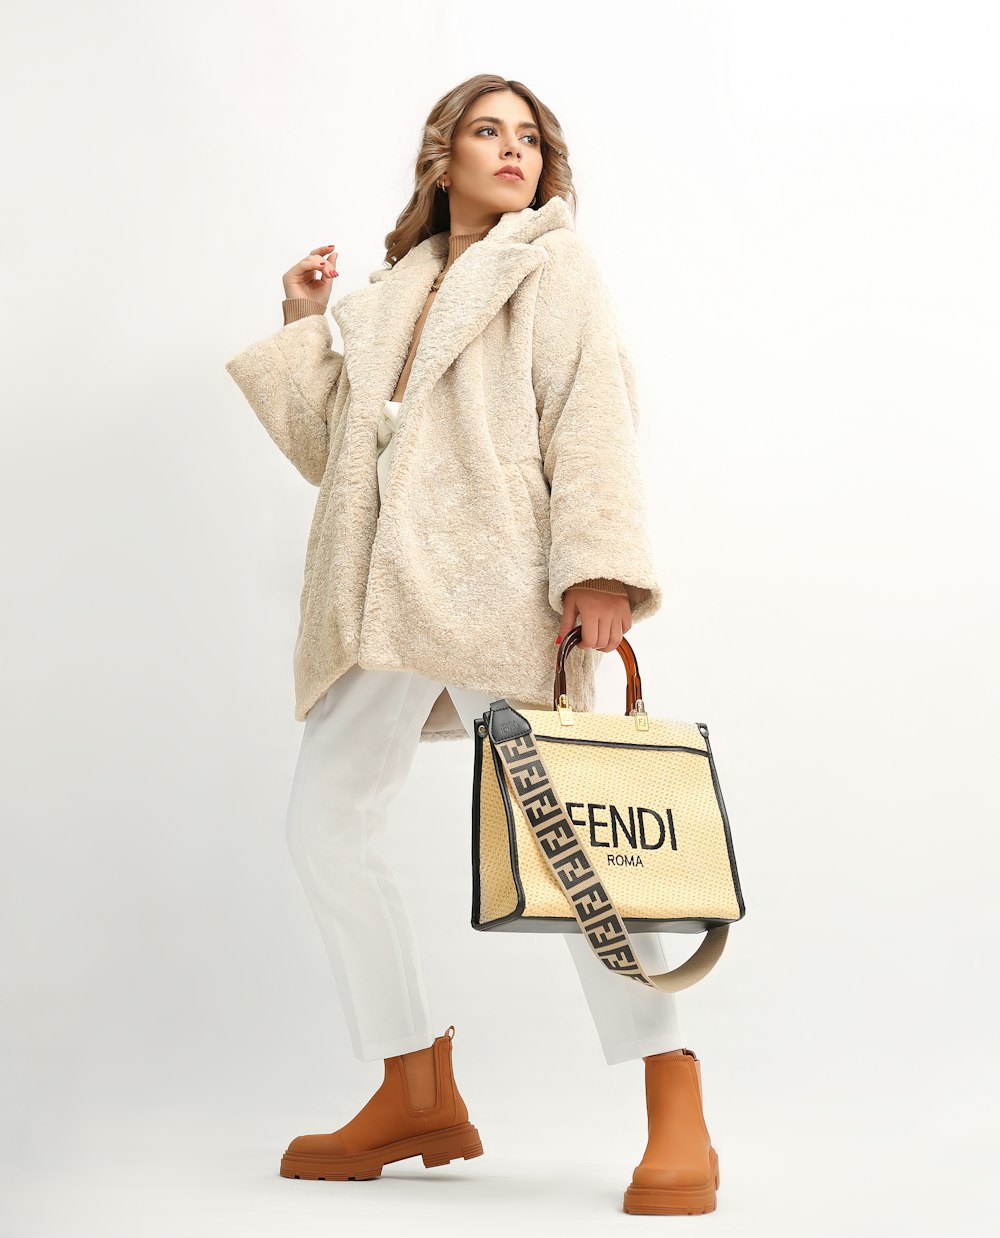 a woman in a fur coat holding a fendi bag